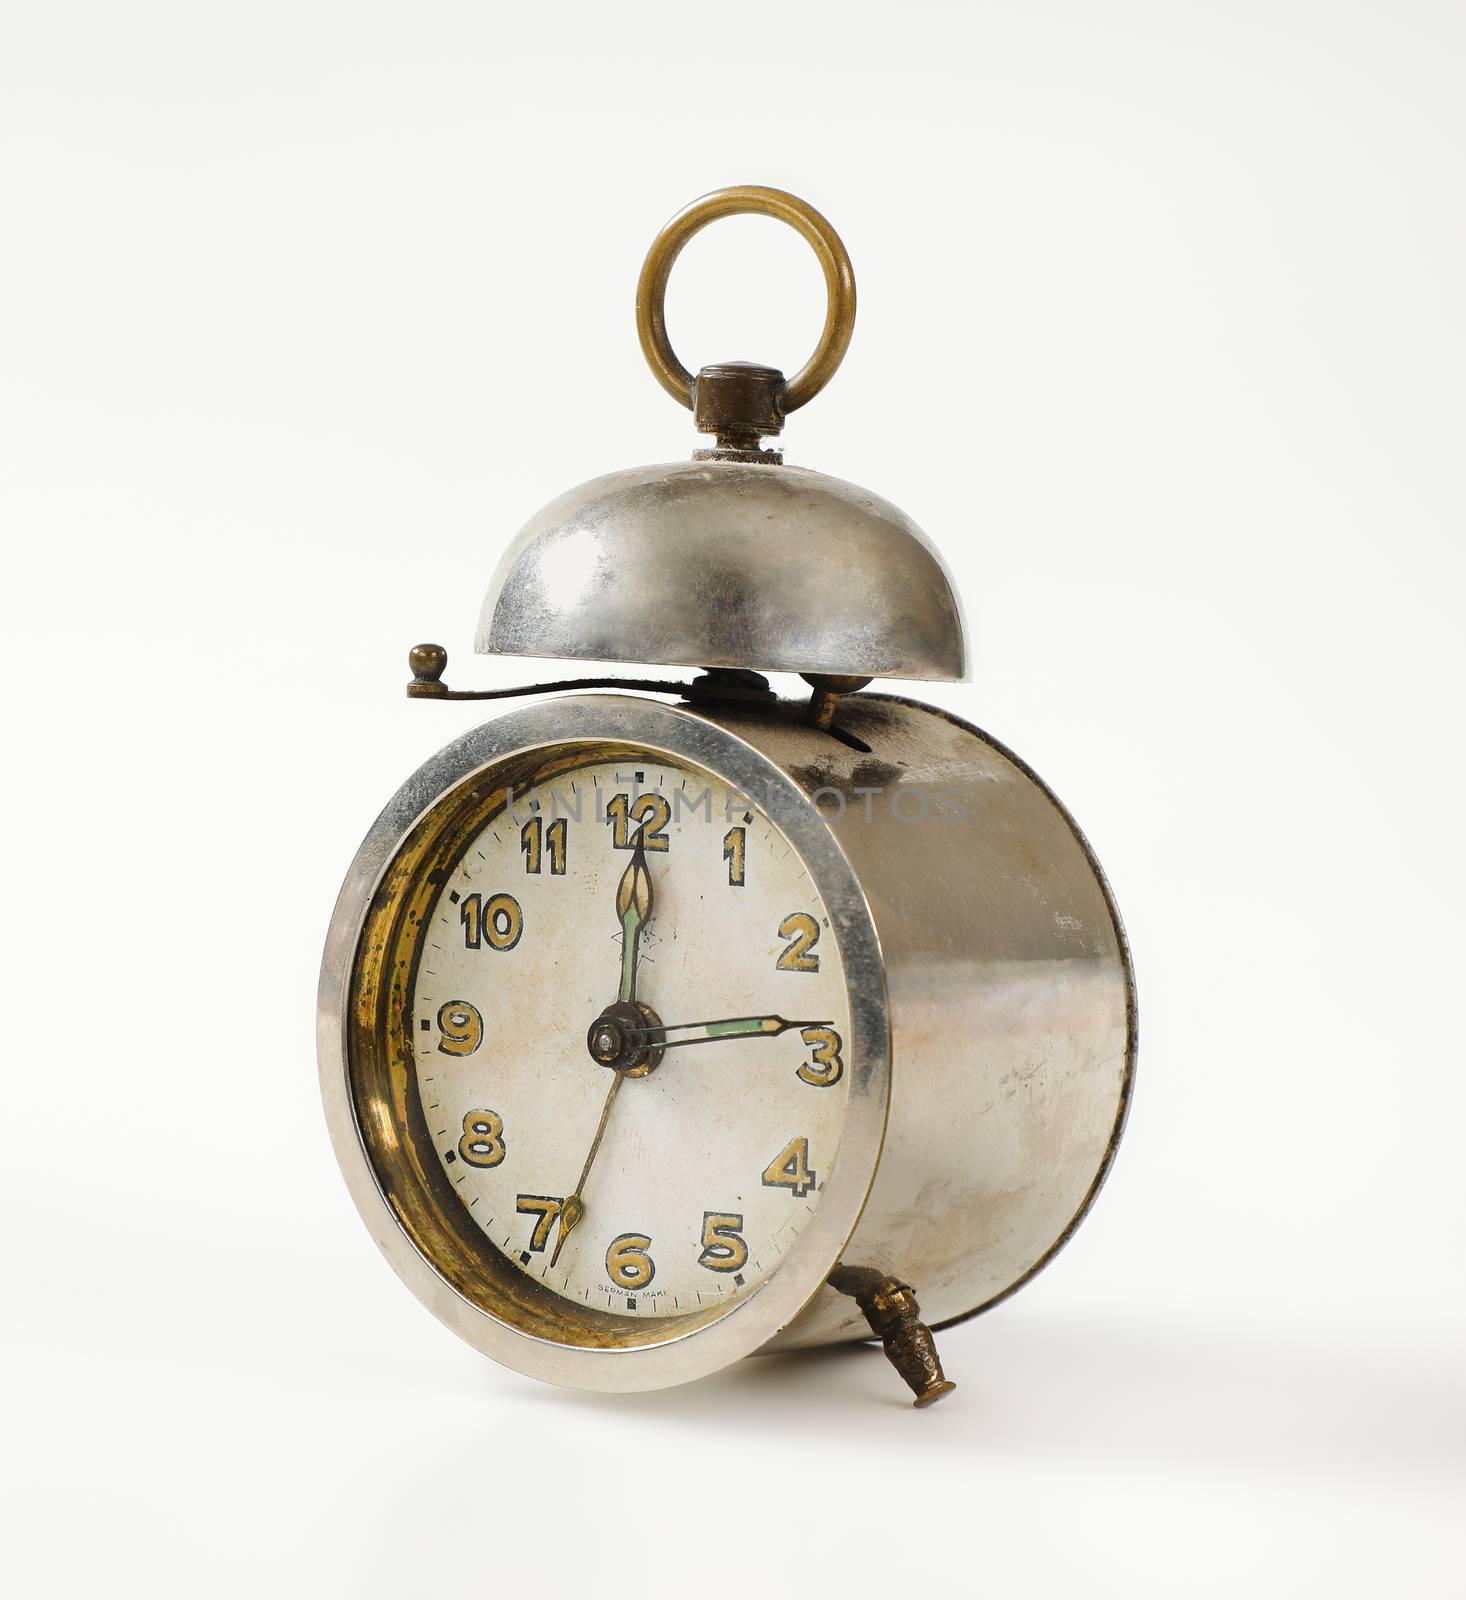 Antique alarm clock by Digifoodstock